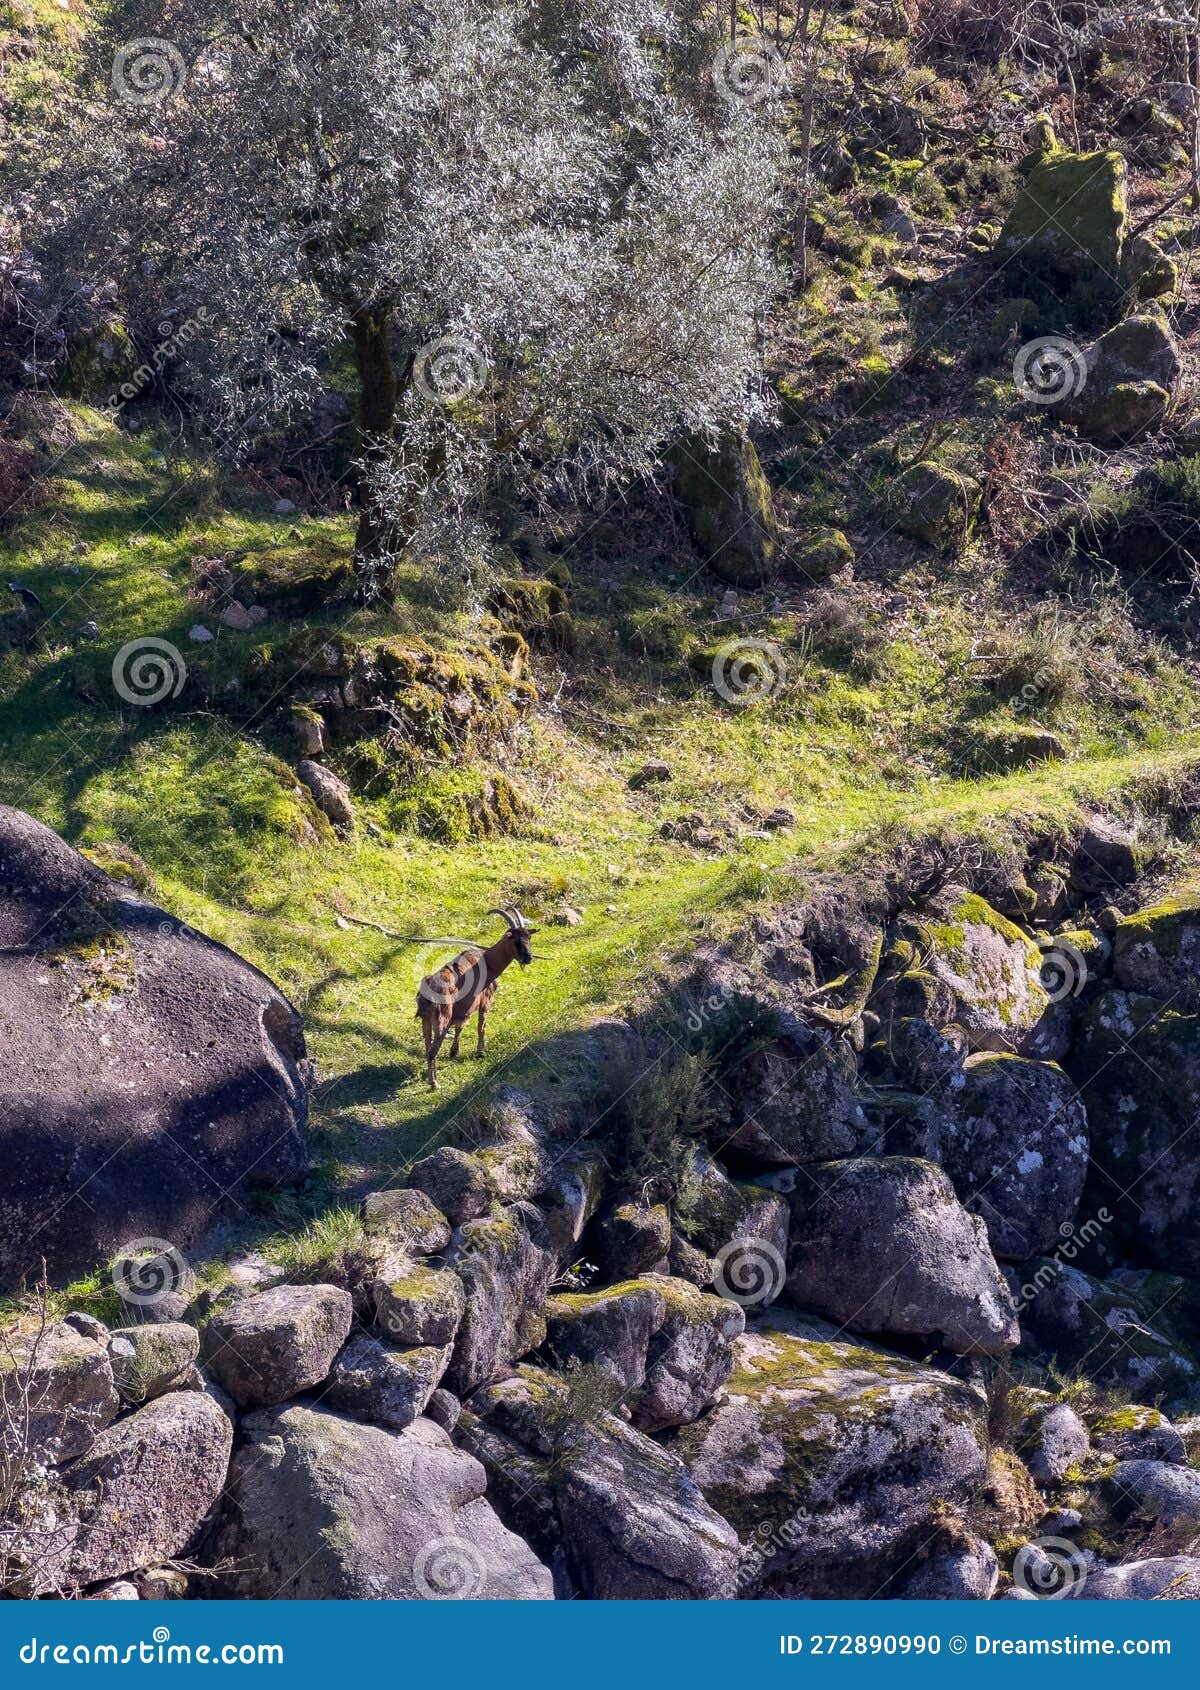 goat grazing next to water stream near fecha de barjas waterfall